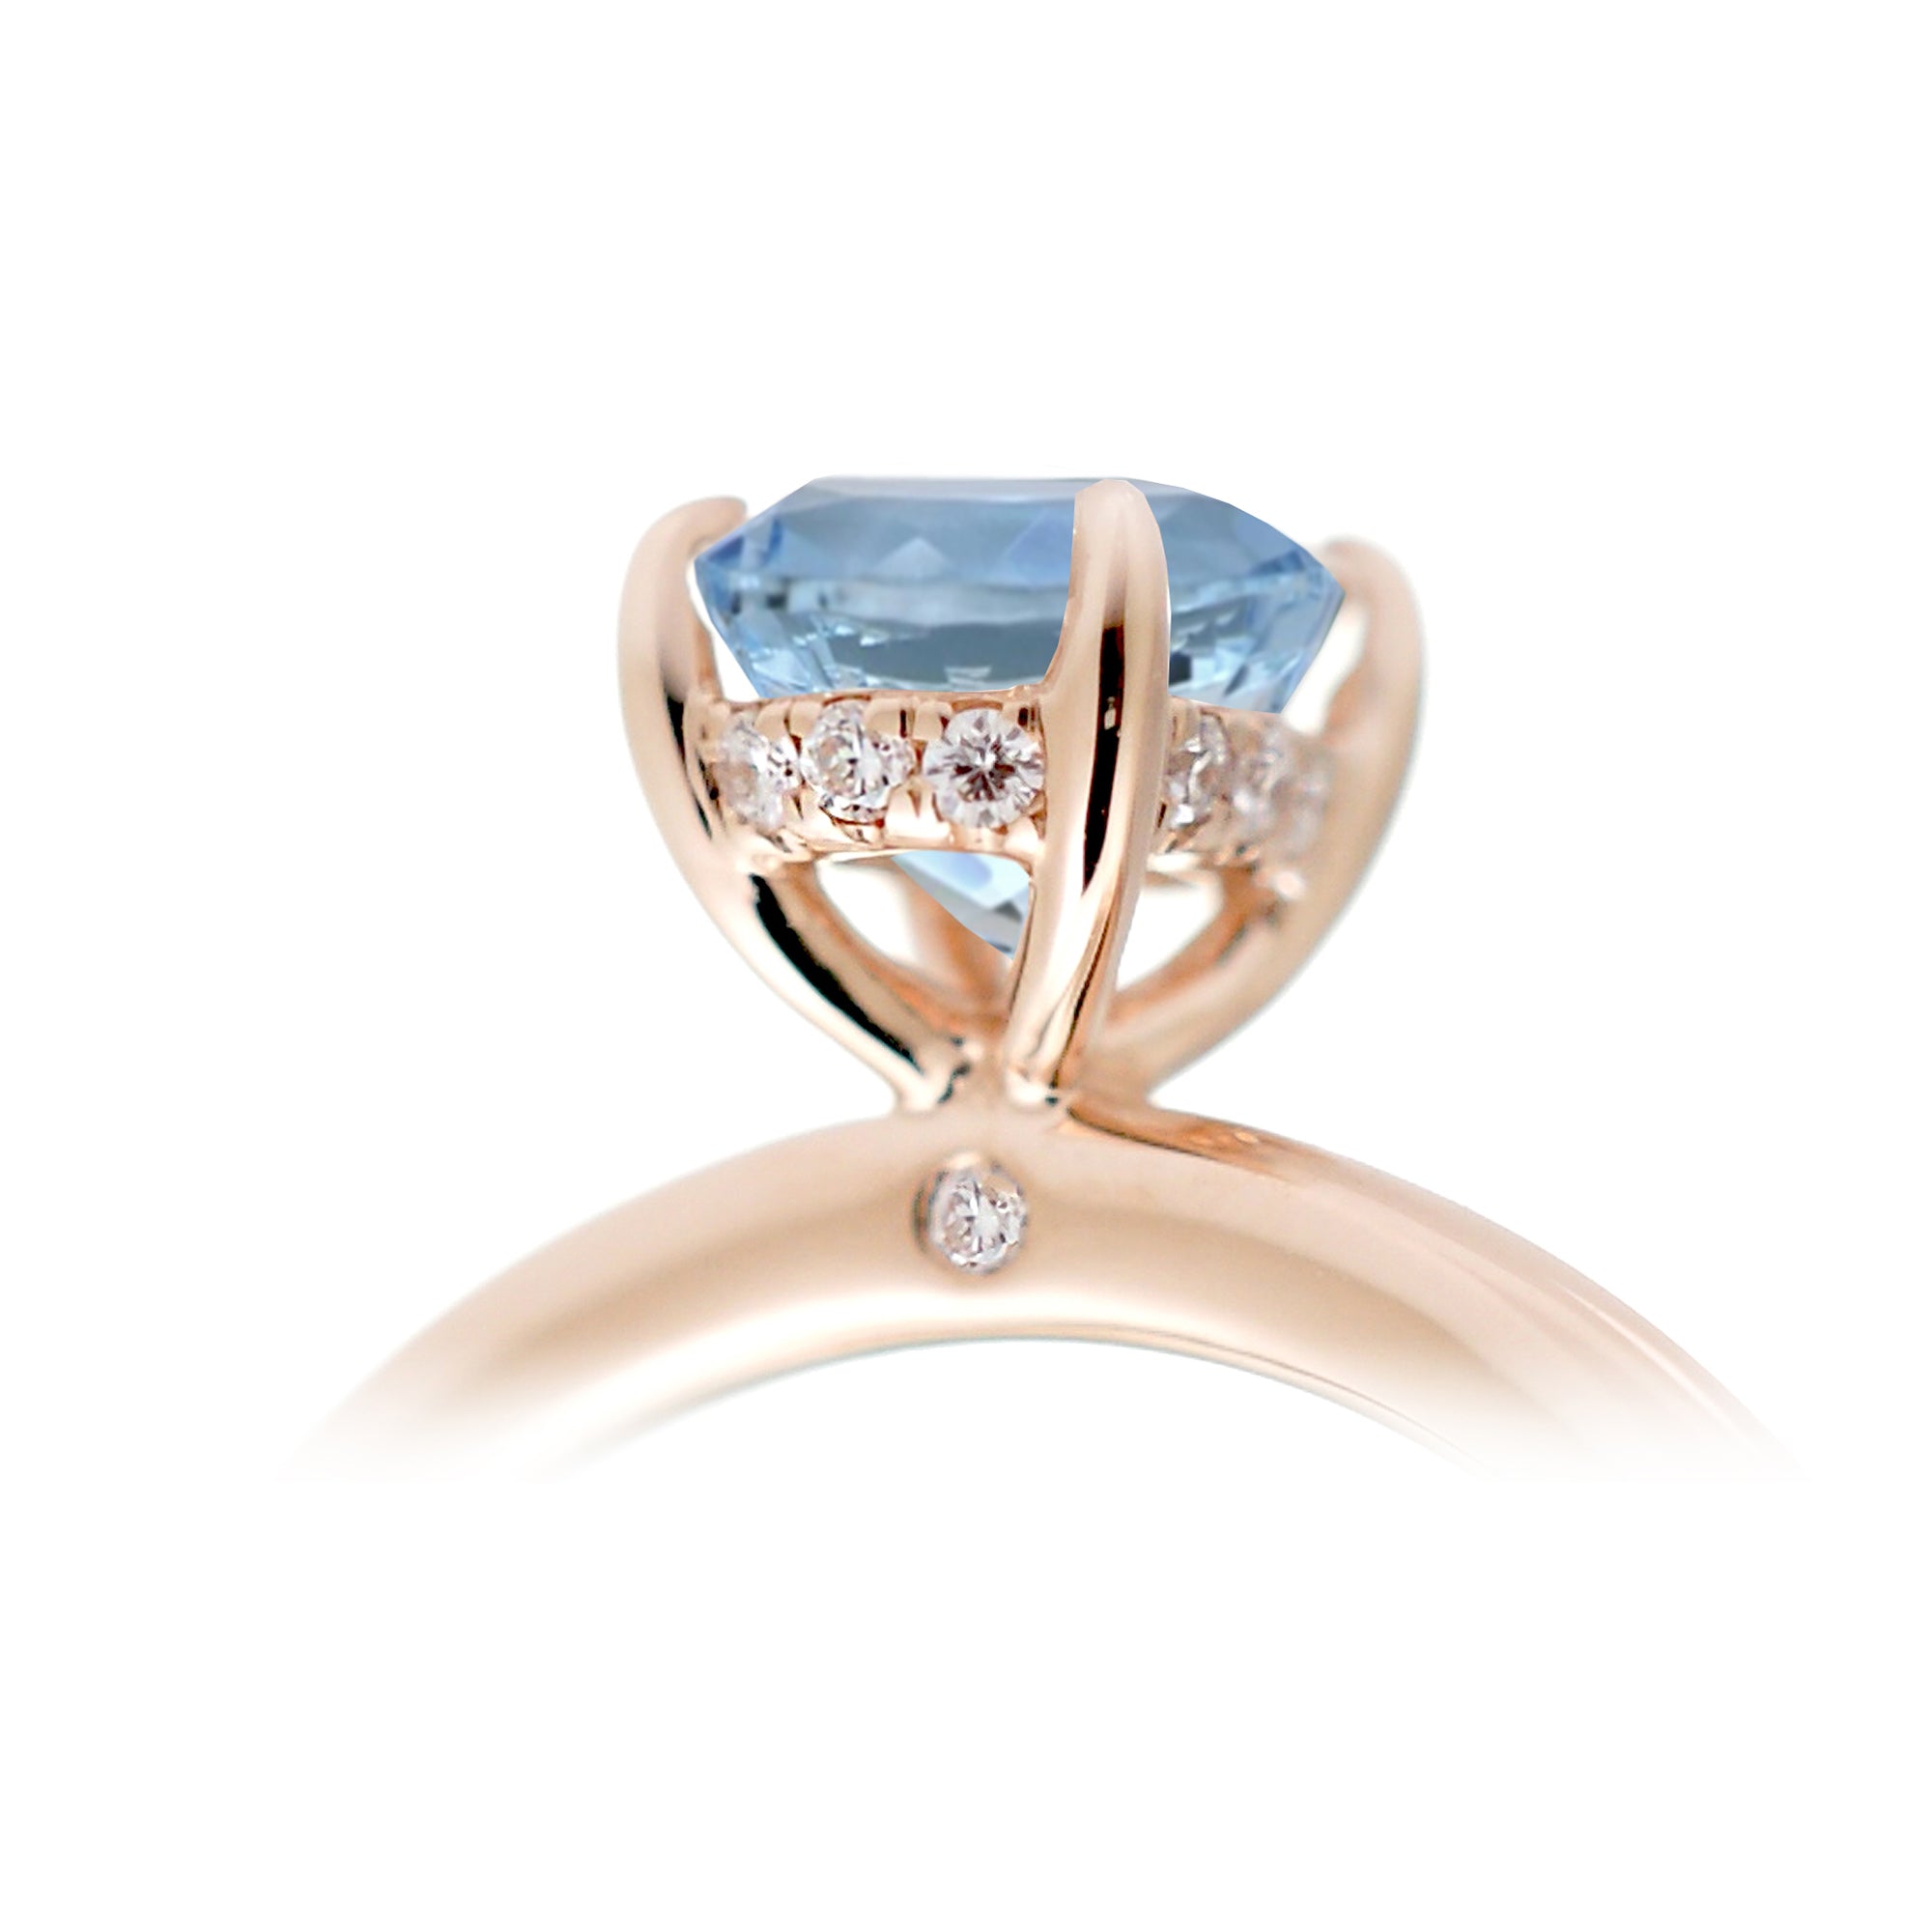 The Lucy Emerald Step Cut Aquamarine Ring